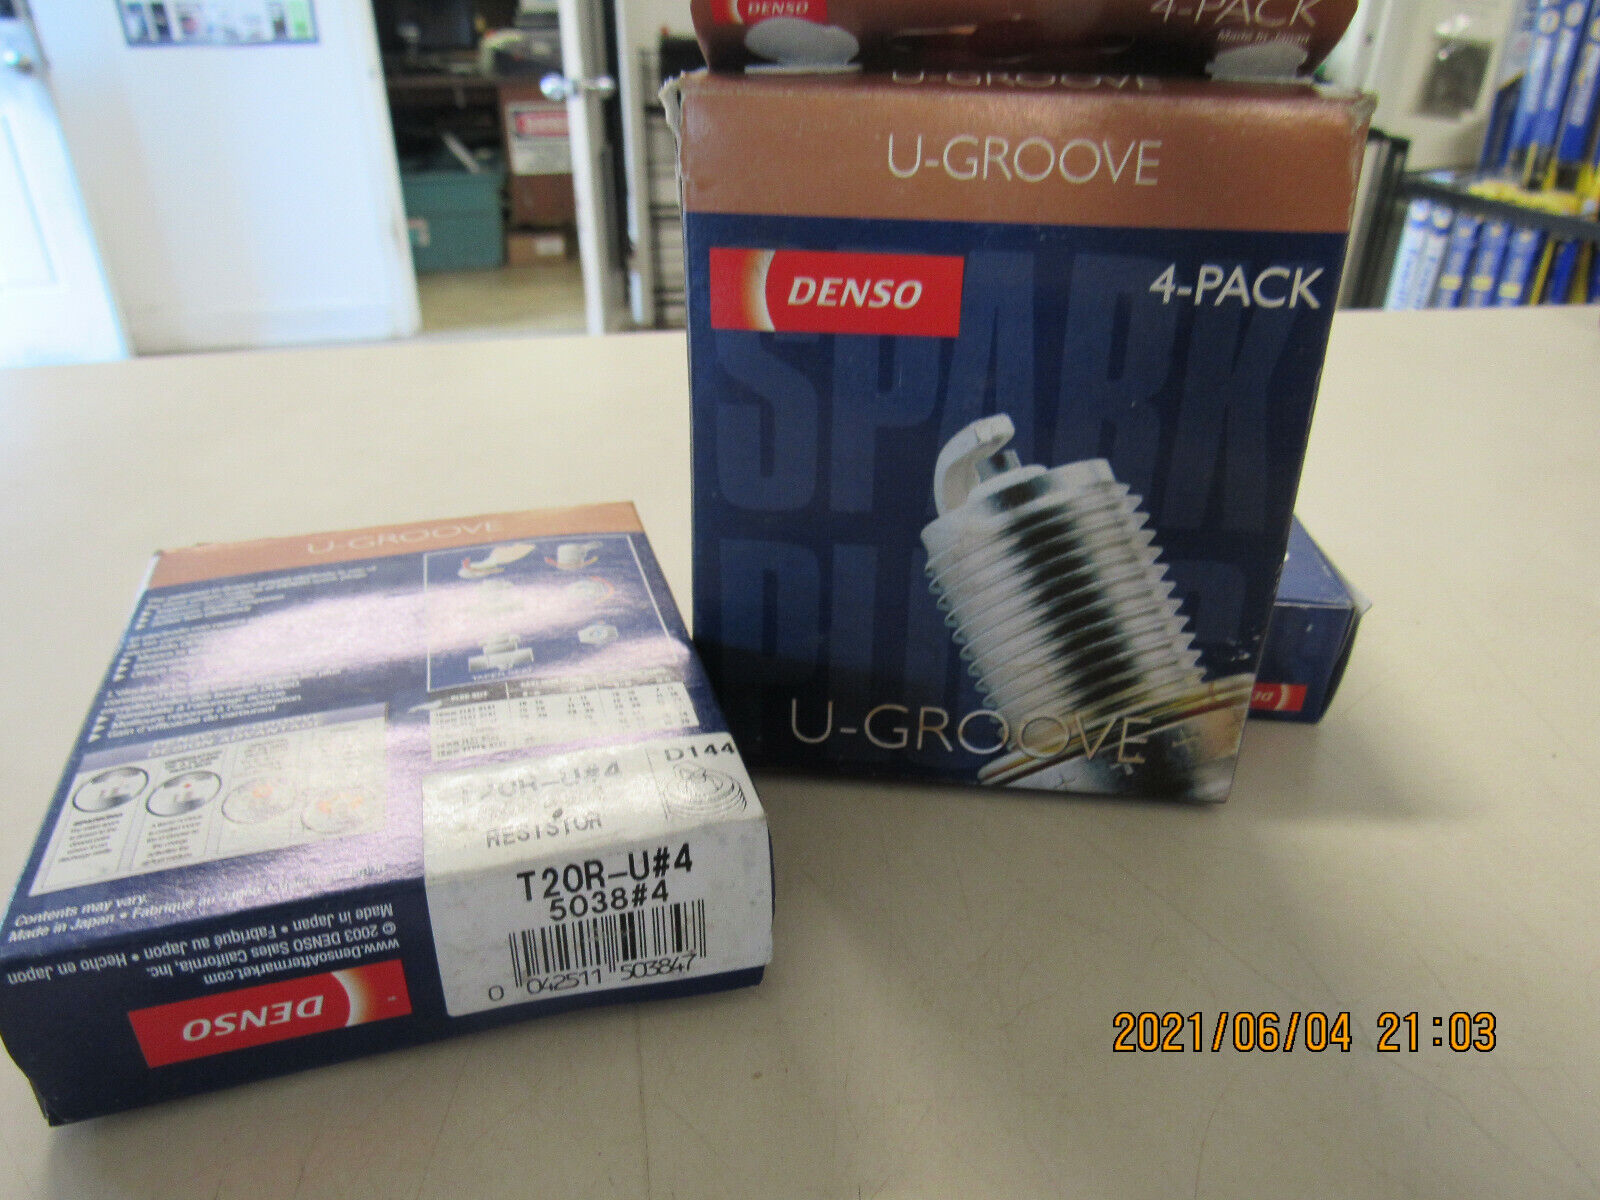 Denso Spark Plugs UGroove T20R-U #4 5038#4 Resistor 2 Boxes -4 pk